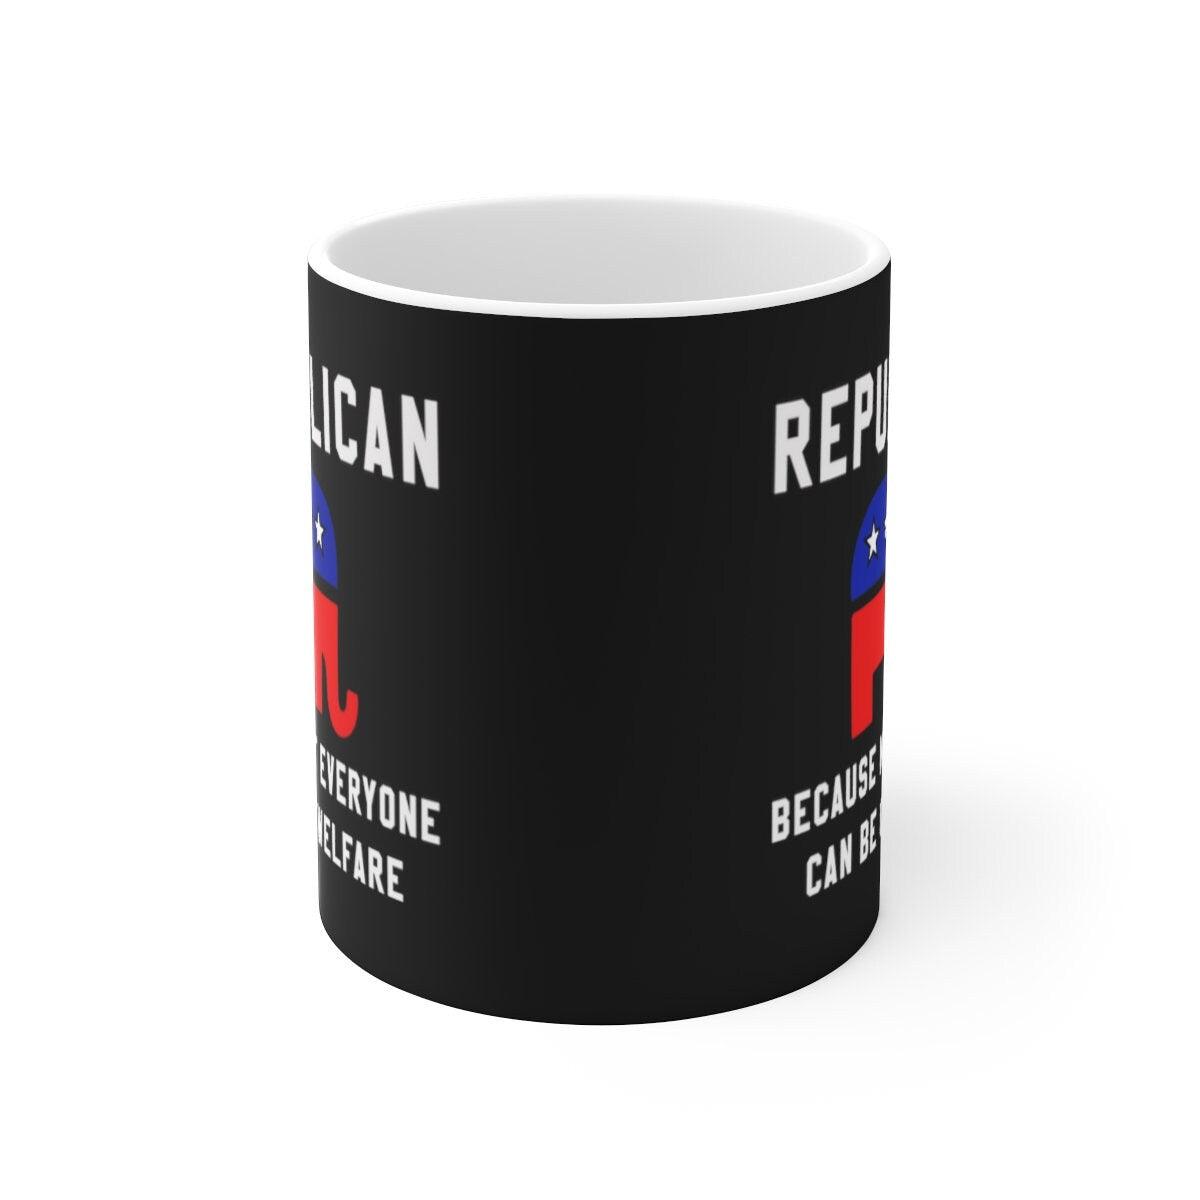 Republican Coffee Mug, Republican Gift, Political Mug, Republican Not everyone can be on Welfare, Raised Republican, Elephant, Ceramic 11oz - plusminusco.com